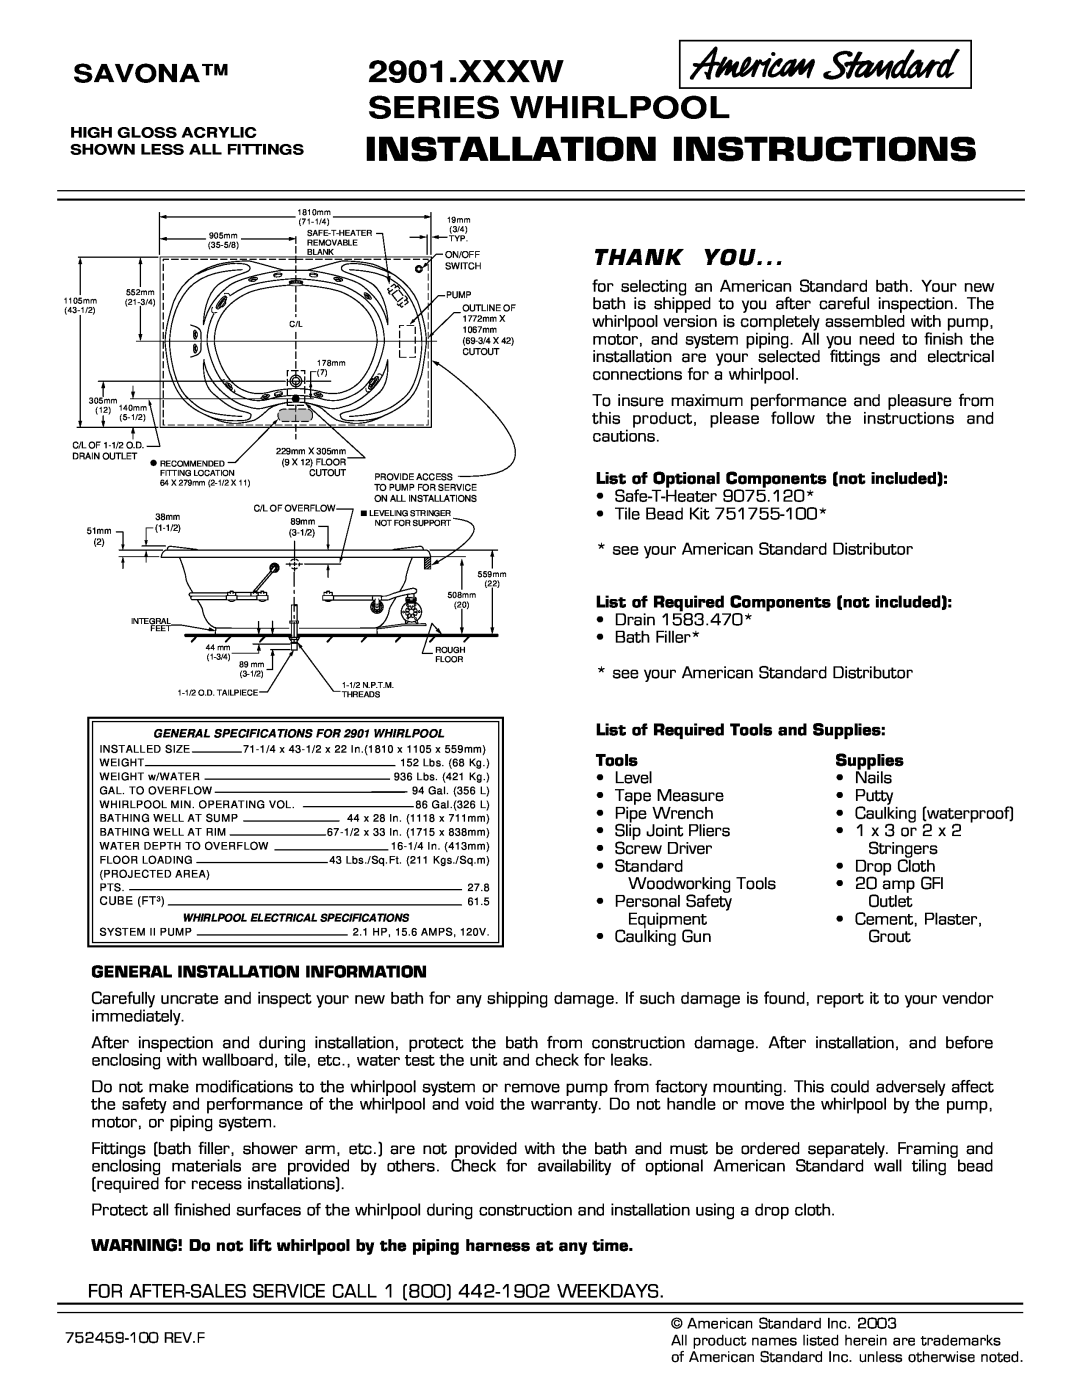 American Standard 2901.XXXW installation instructions Installation Instructions, Xxxw Series Whirlpool, Savona, Thank You 